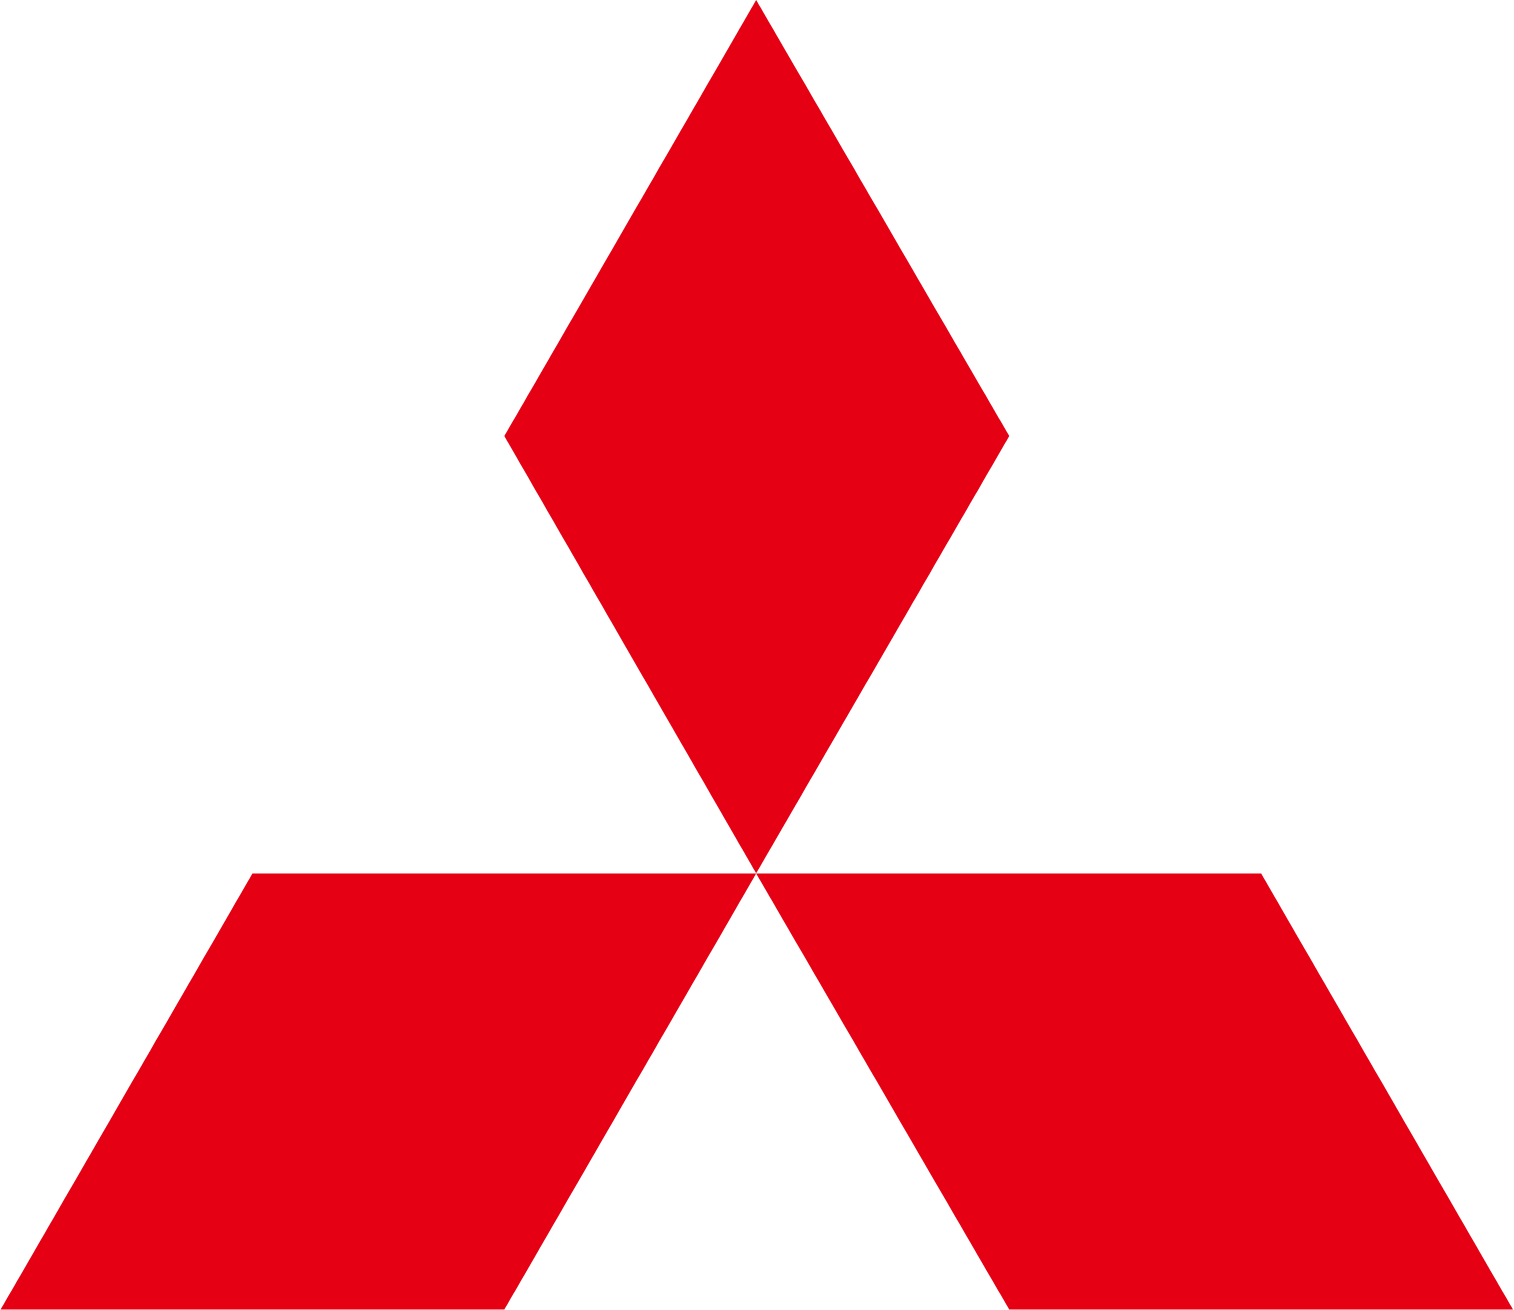 Mitsubishi Motors Logo In Transparent Png And Vectorized Svg Formats